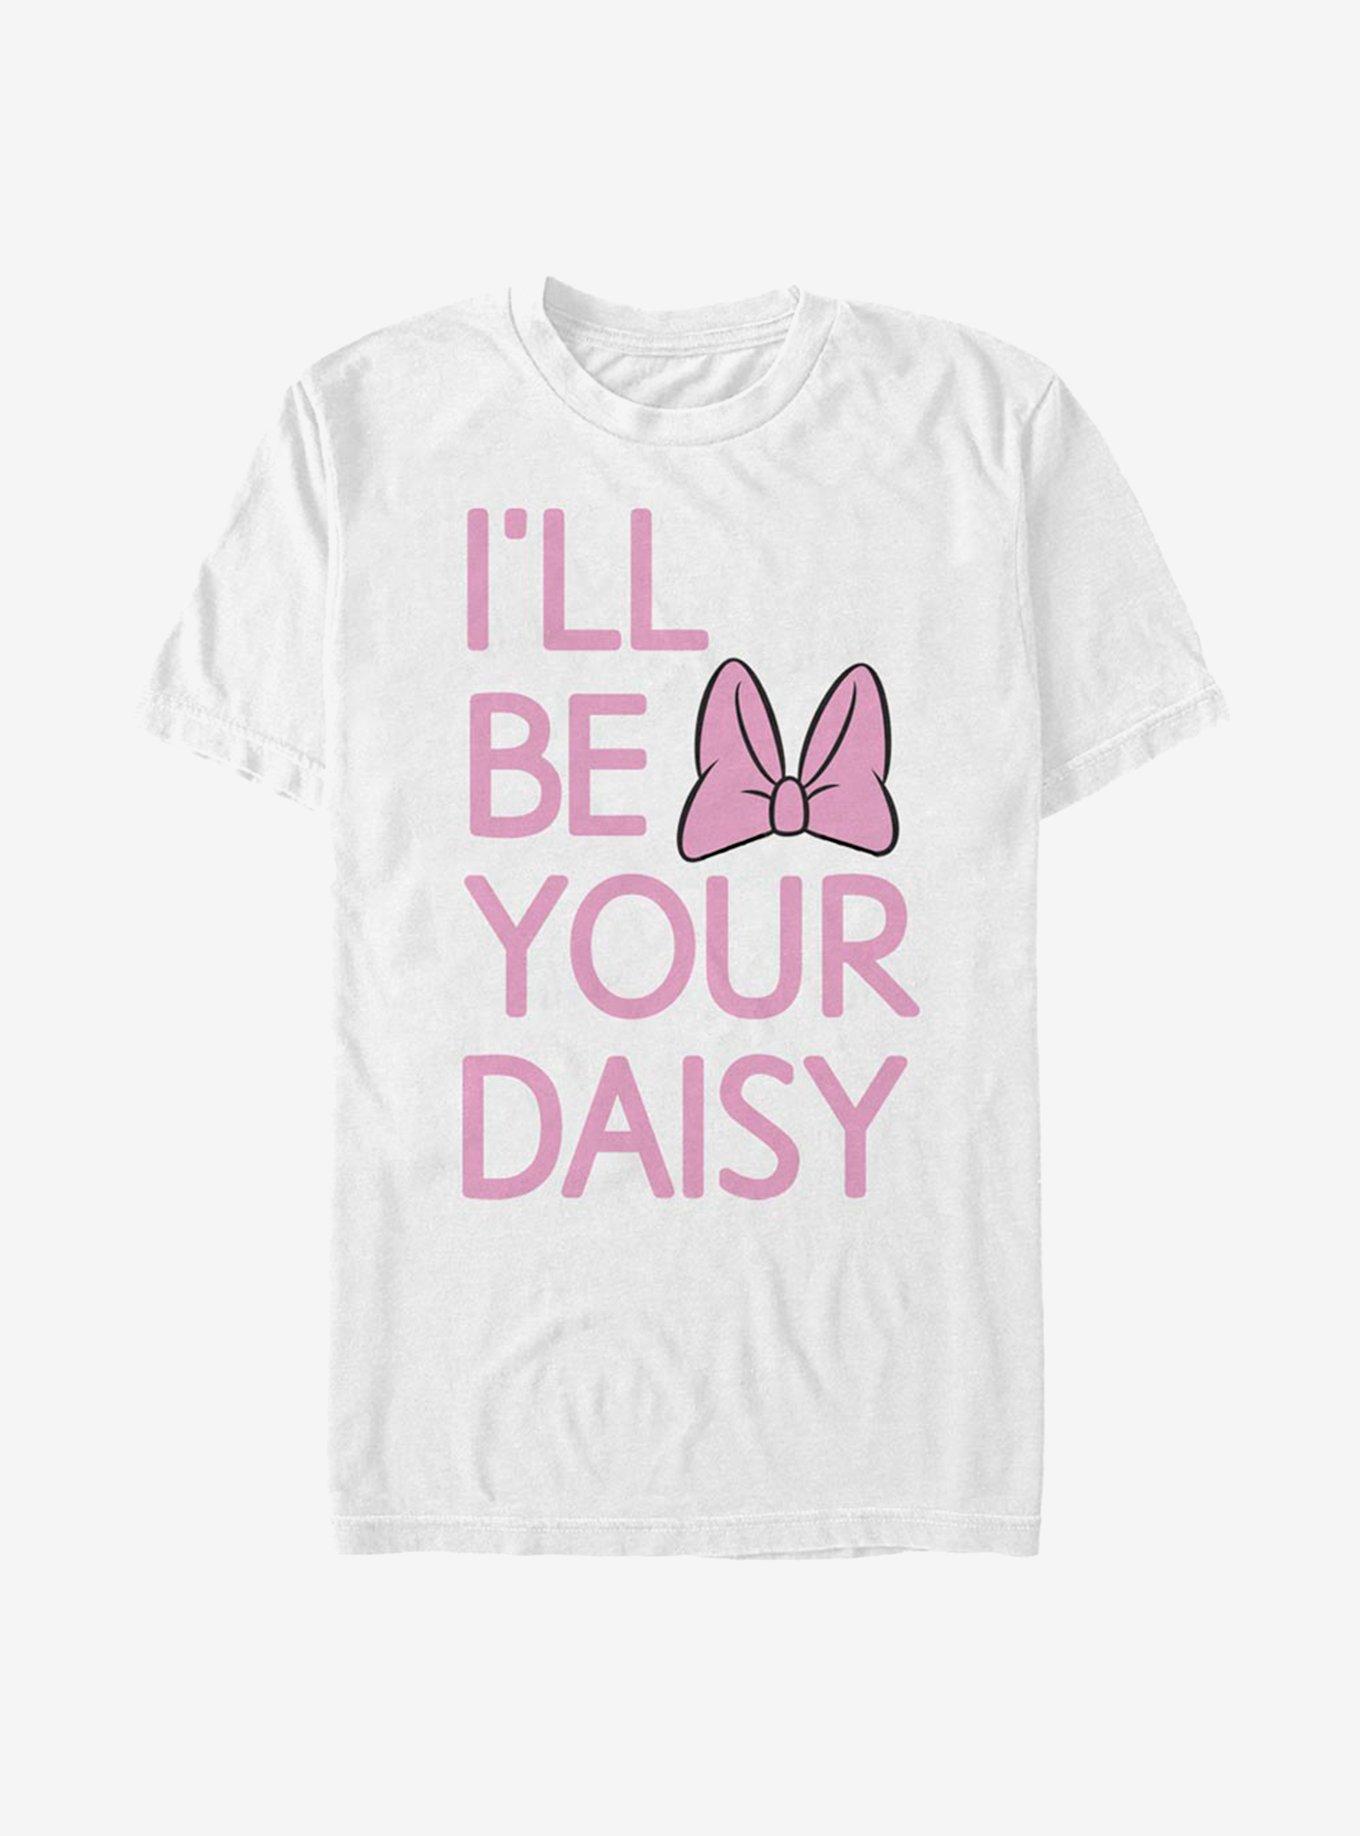 Disney Daisy Duck Your Daisy T-Shirt, , hi-res